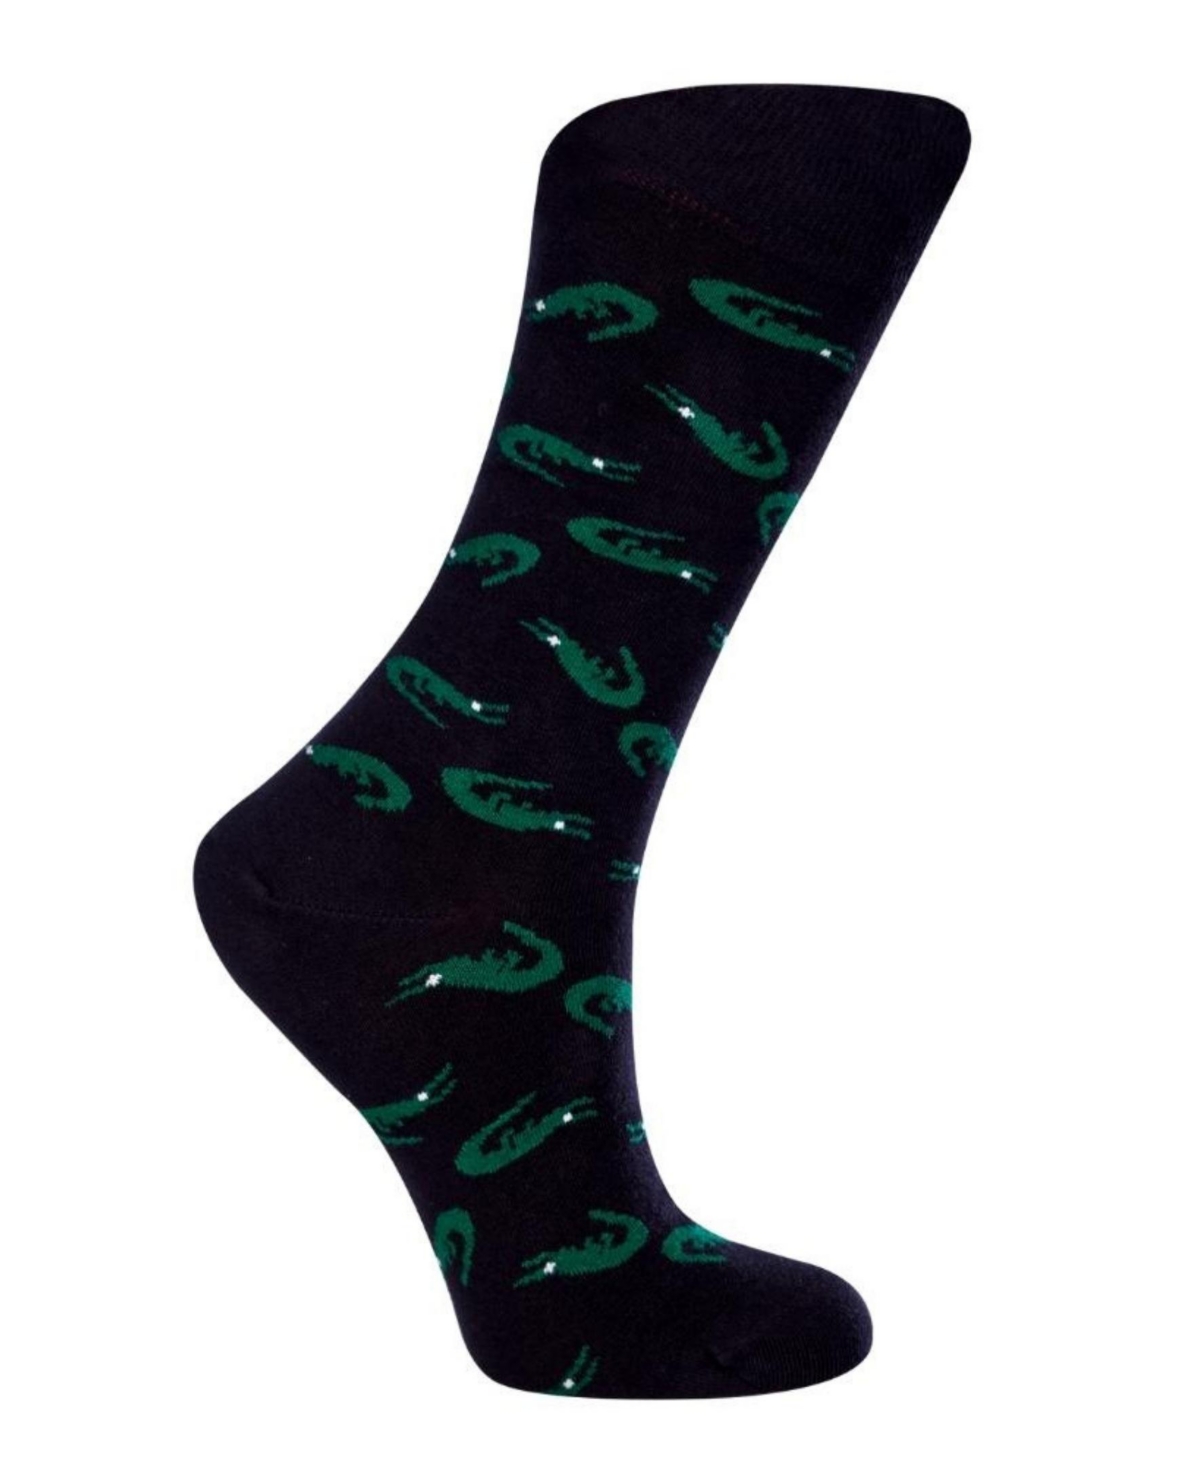 Women's Alligator W-Cotton Novelty Crew Socks with Seamless Toe Design, Pack of 1 - Black